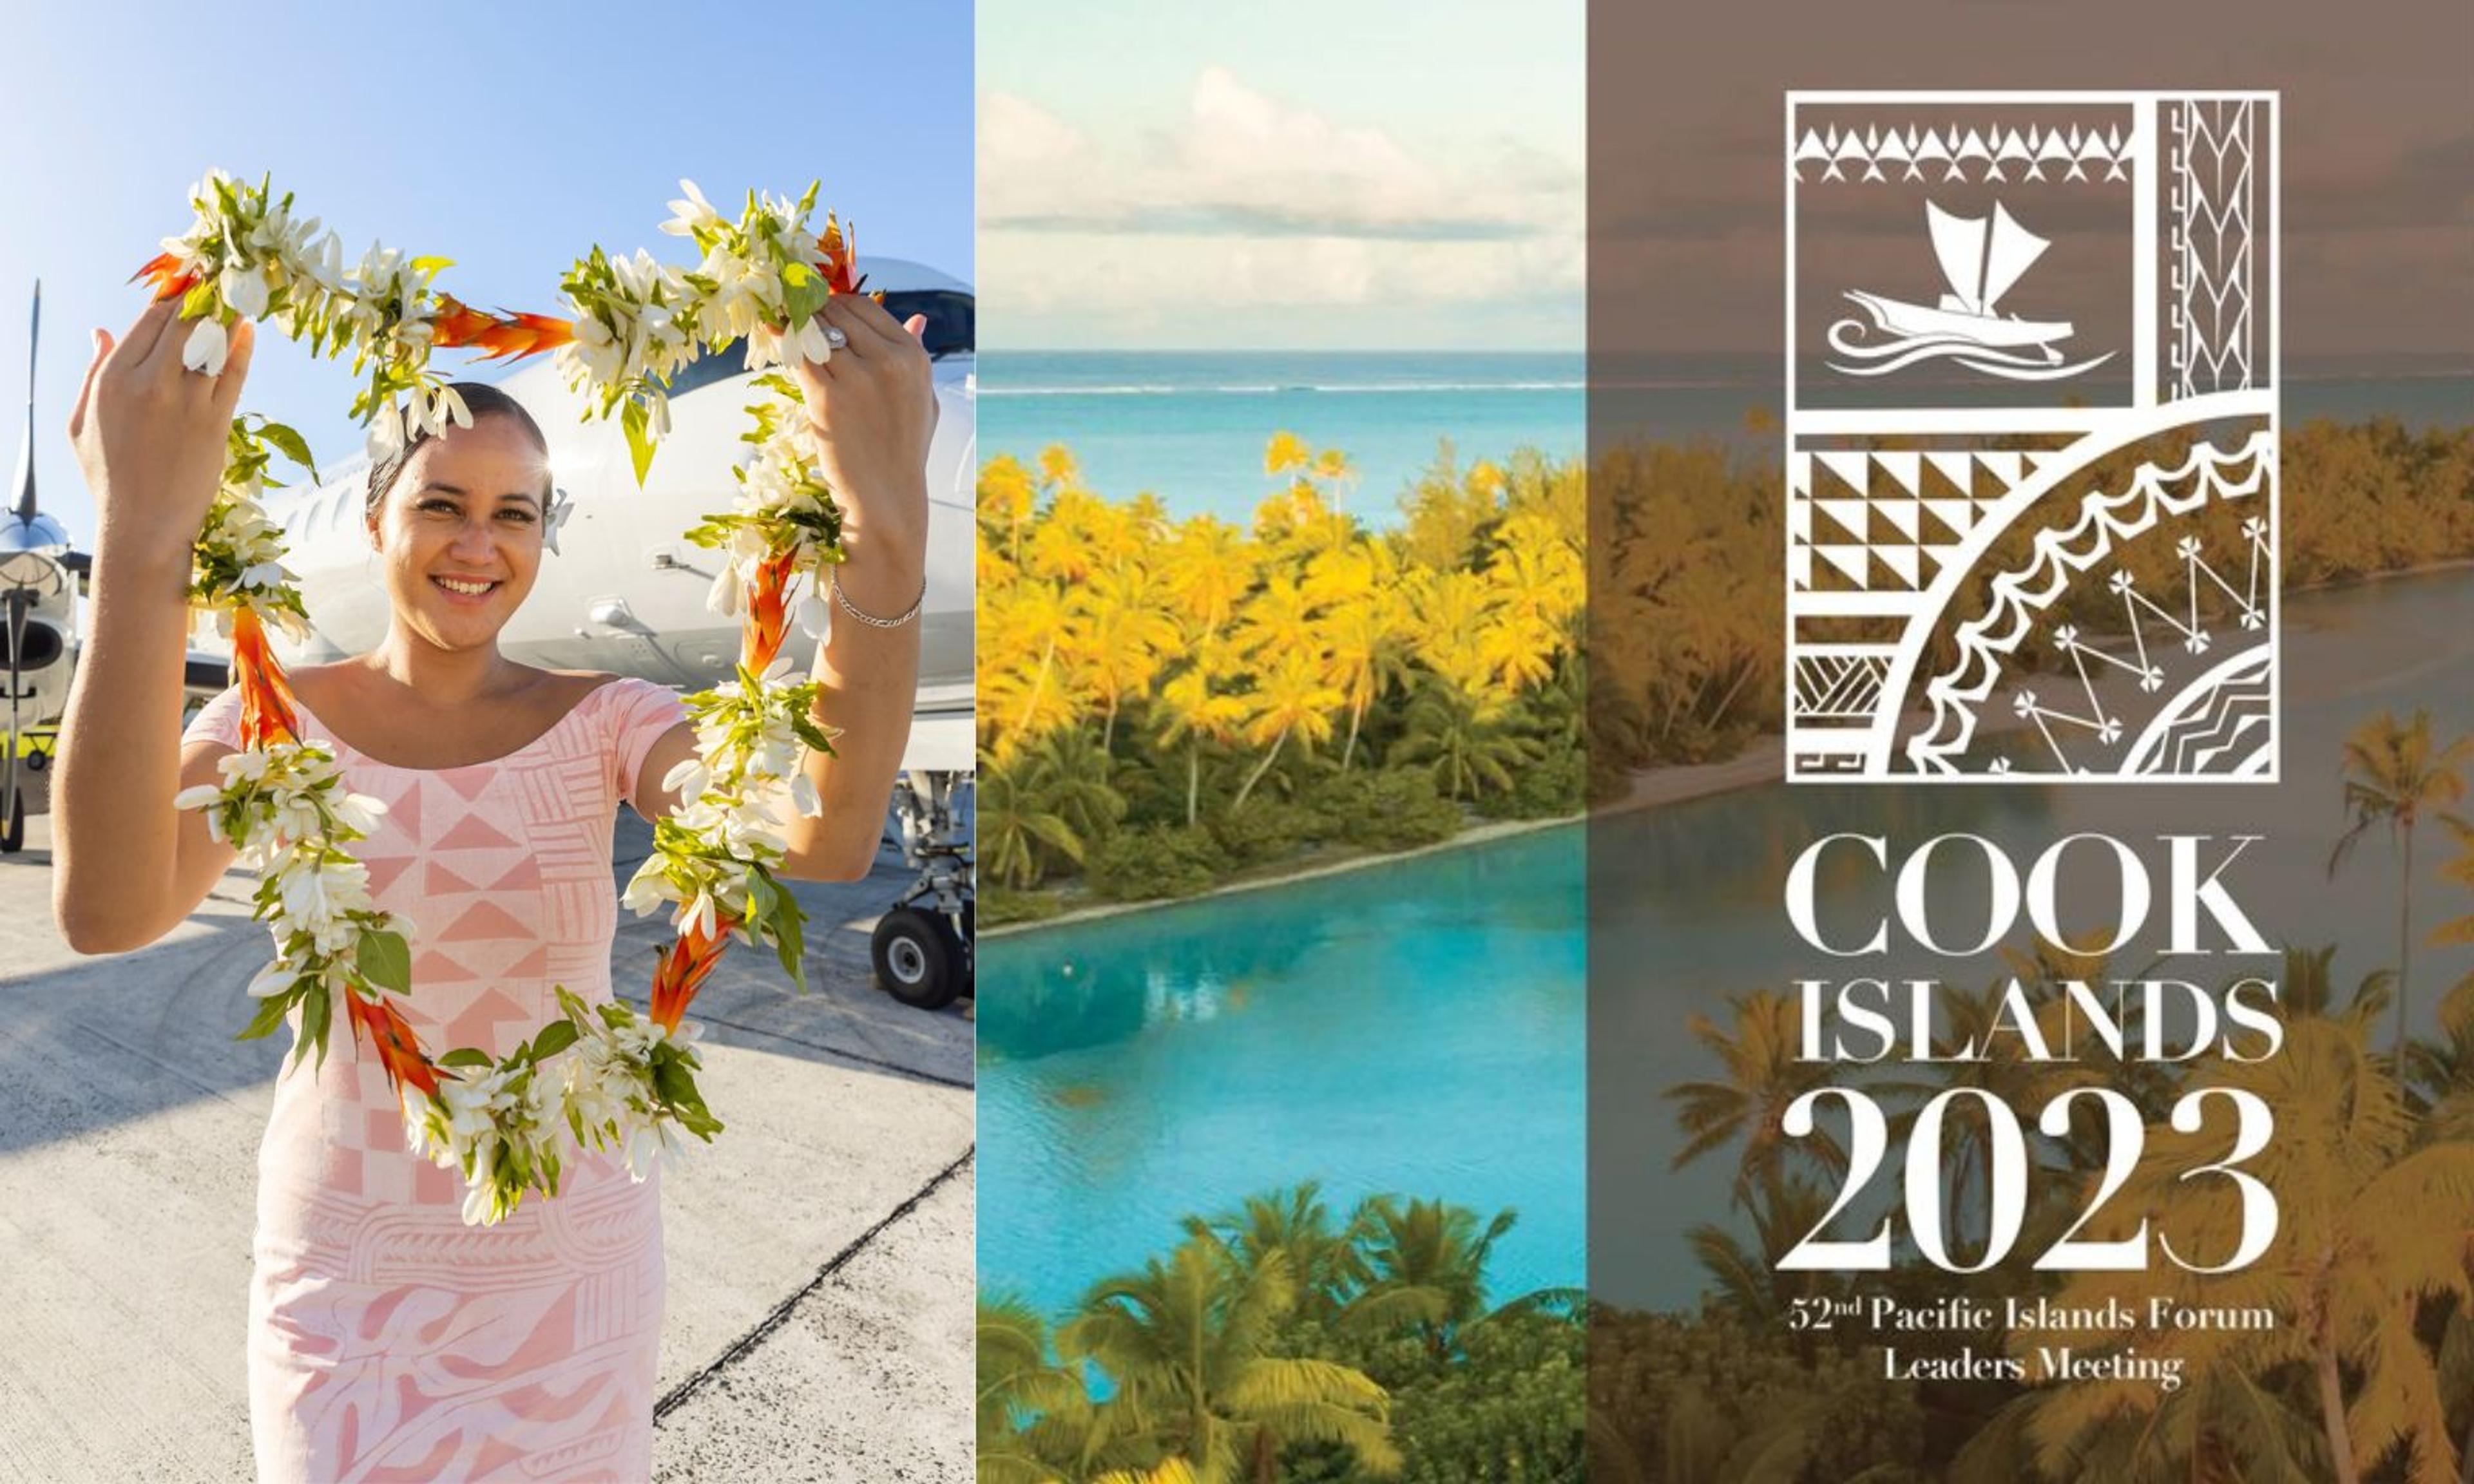 The week-long Pacific Islands Forum starts in Rarotonga on 6 November.